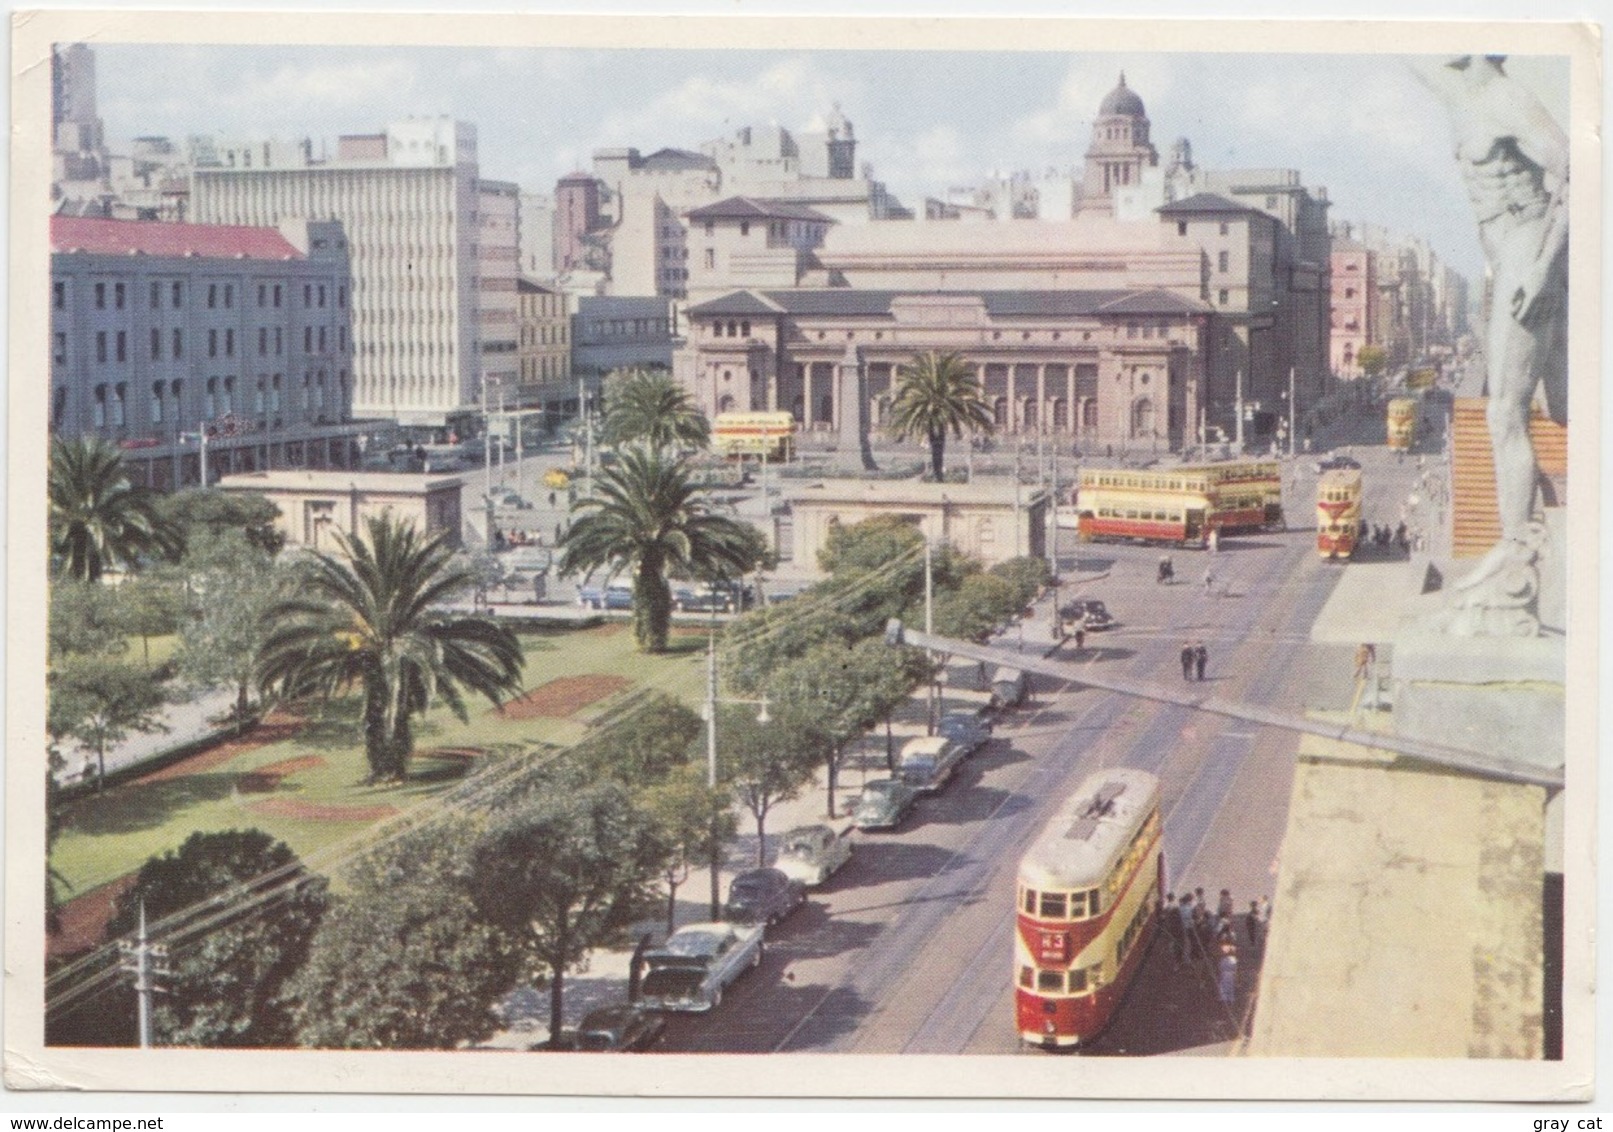 JOHANNESBURG Scenes, Library Gardens, South Africa, 1959 Used Postcard [21775] - Afrique Du Sud